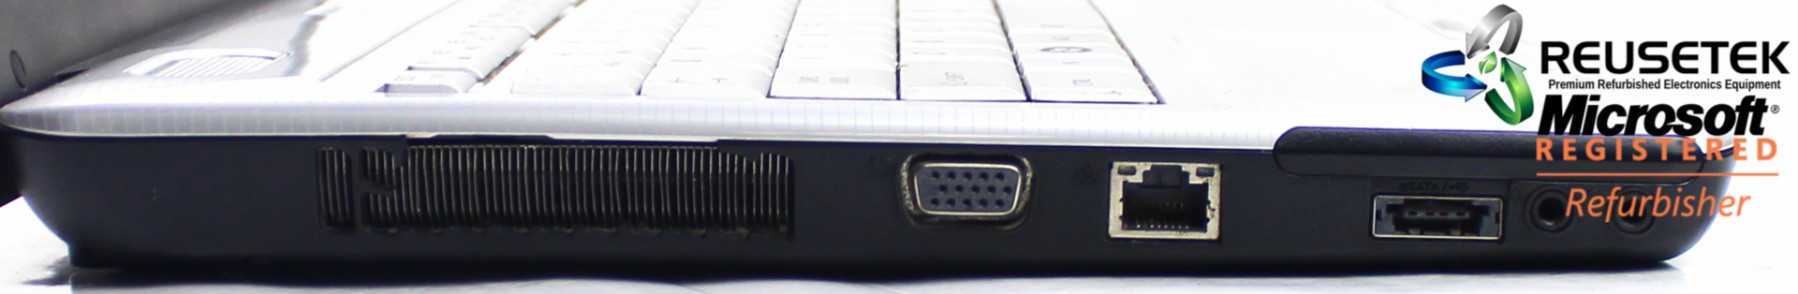 500031518-Toshiba Satellite L505-ES5018 15.6" Notebook Laptop-image